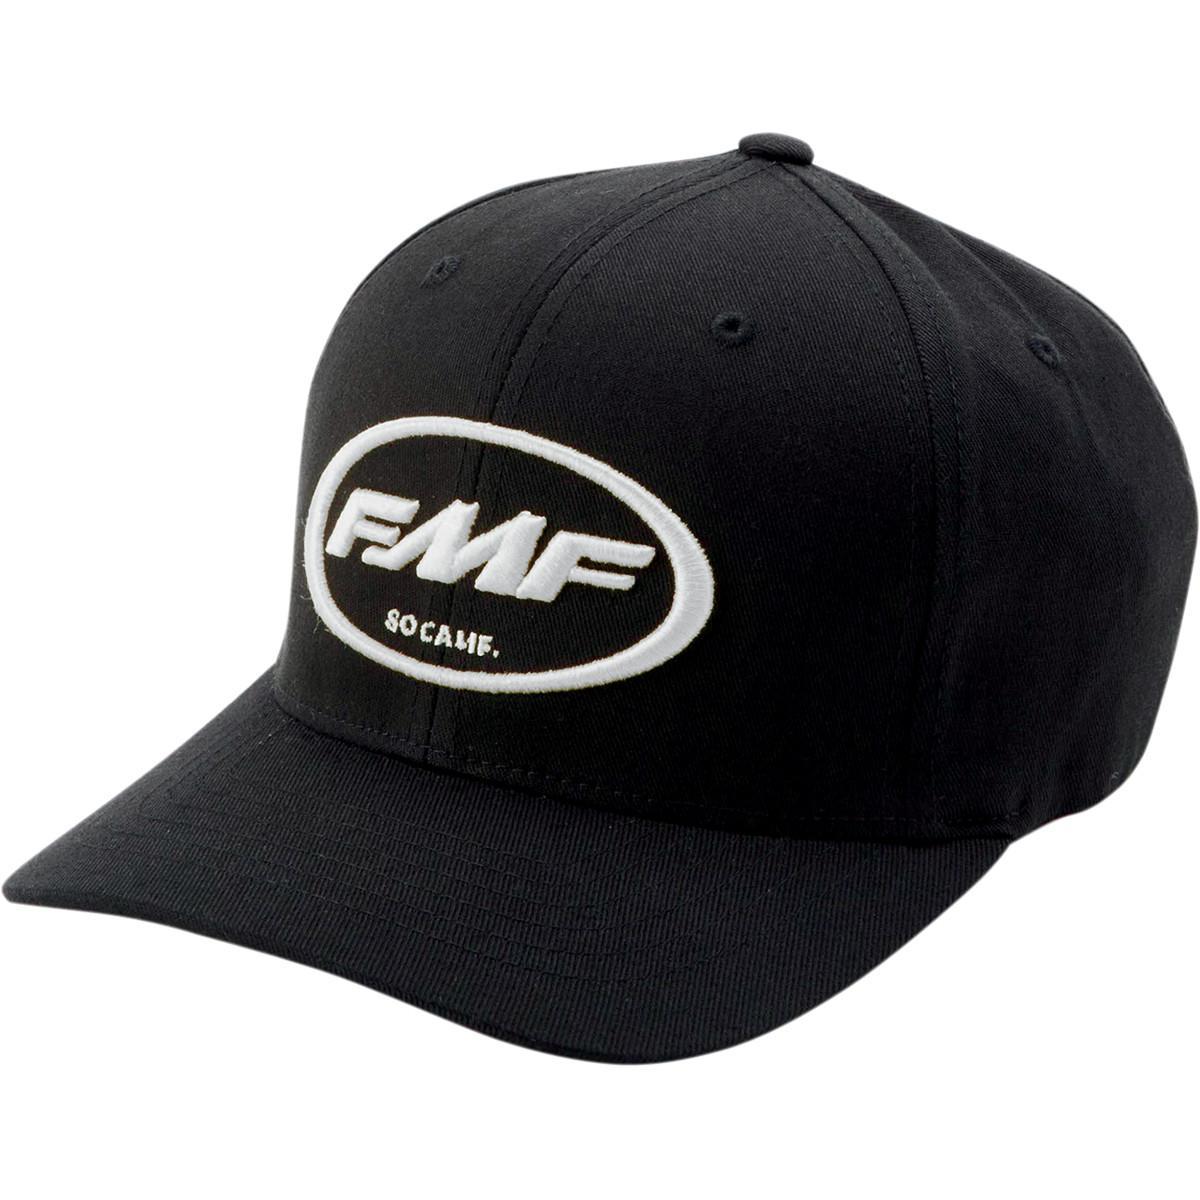 Fmf racing factory don hat black/white small - medium f31196103blws/m